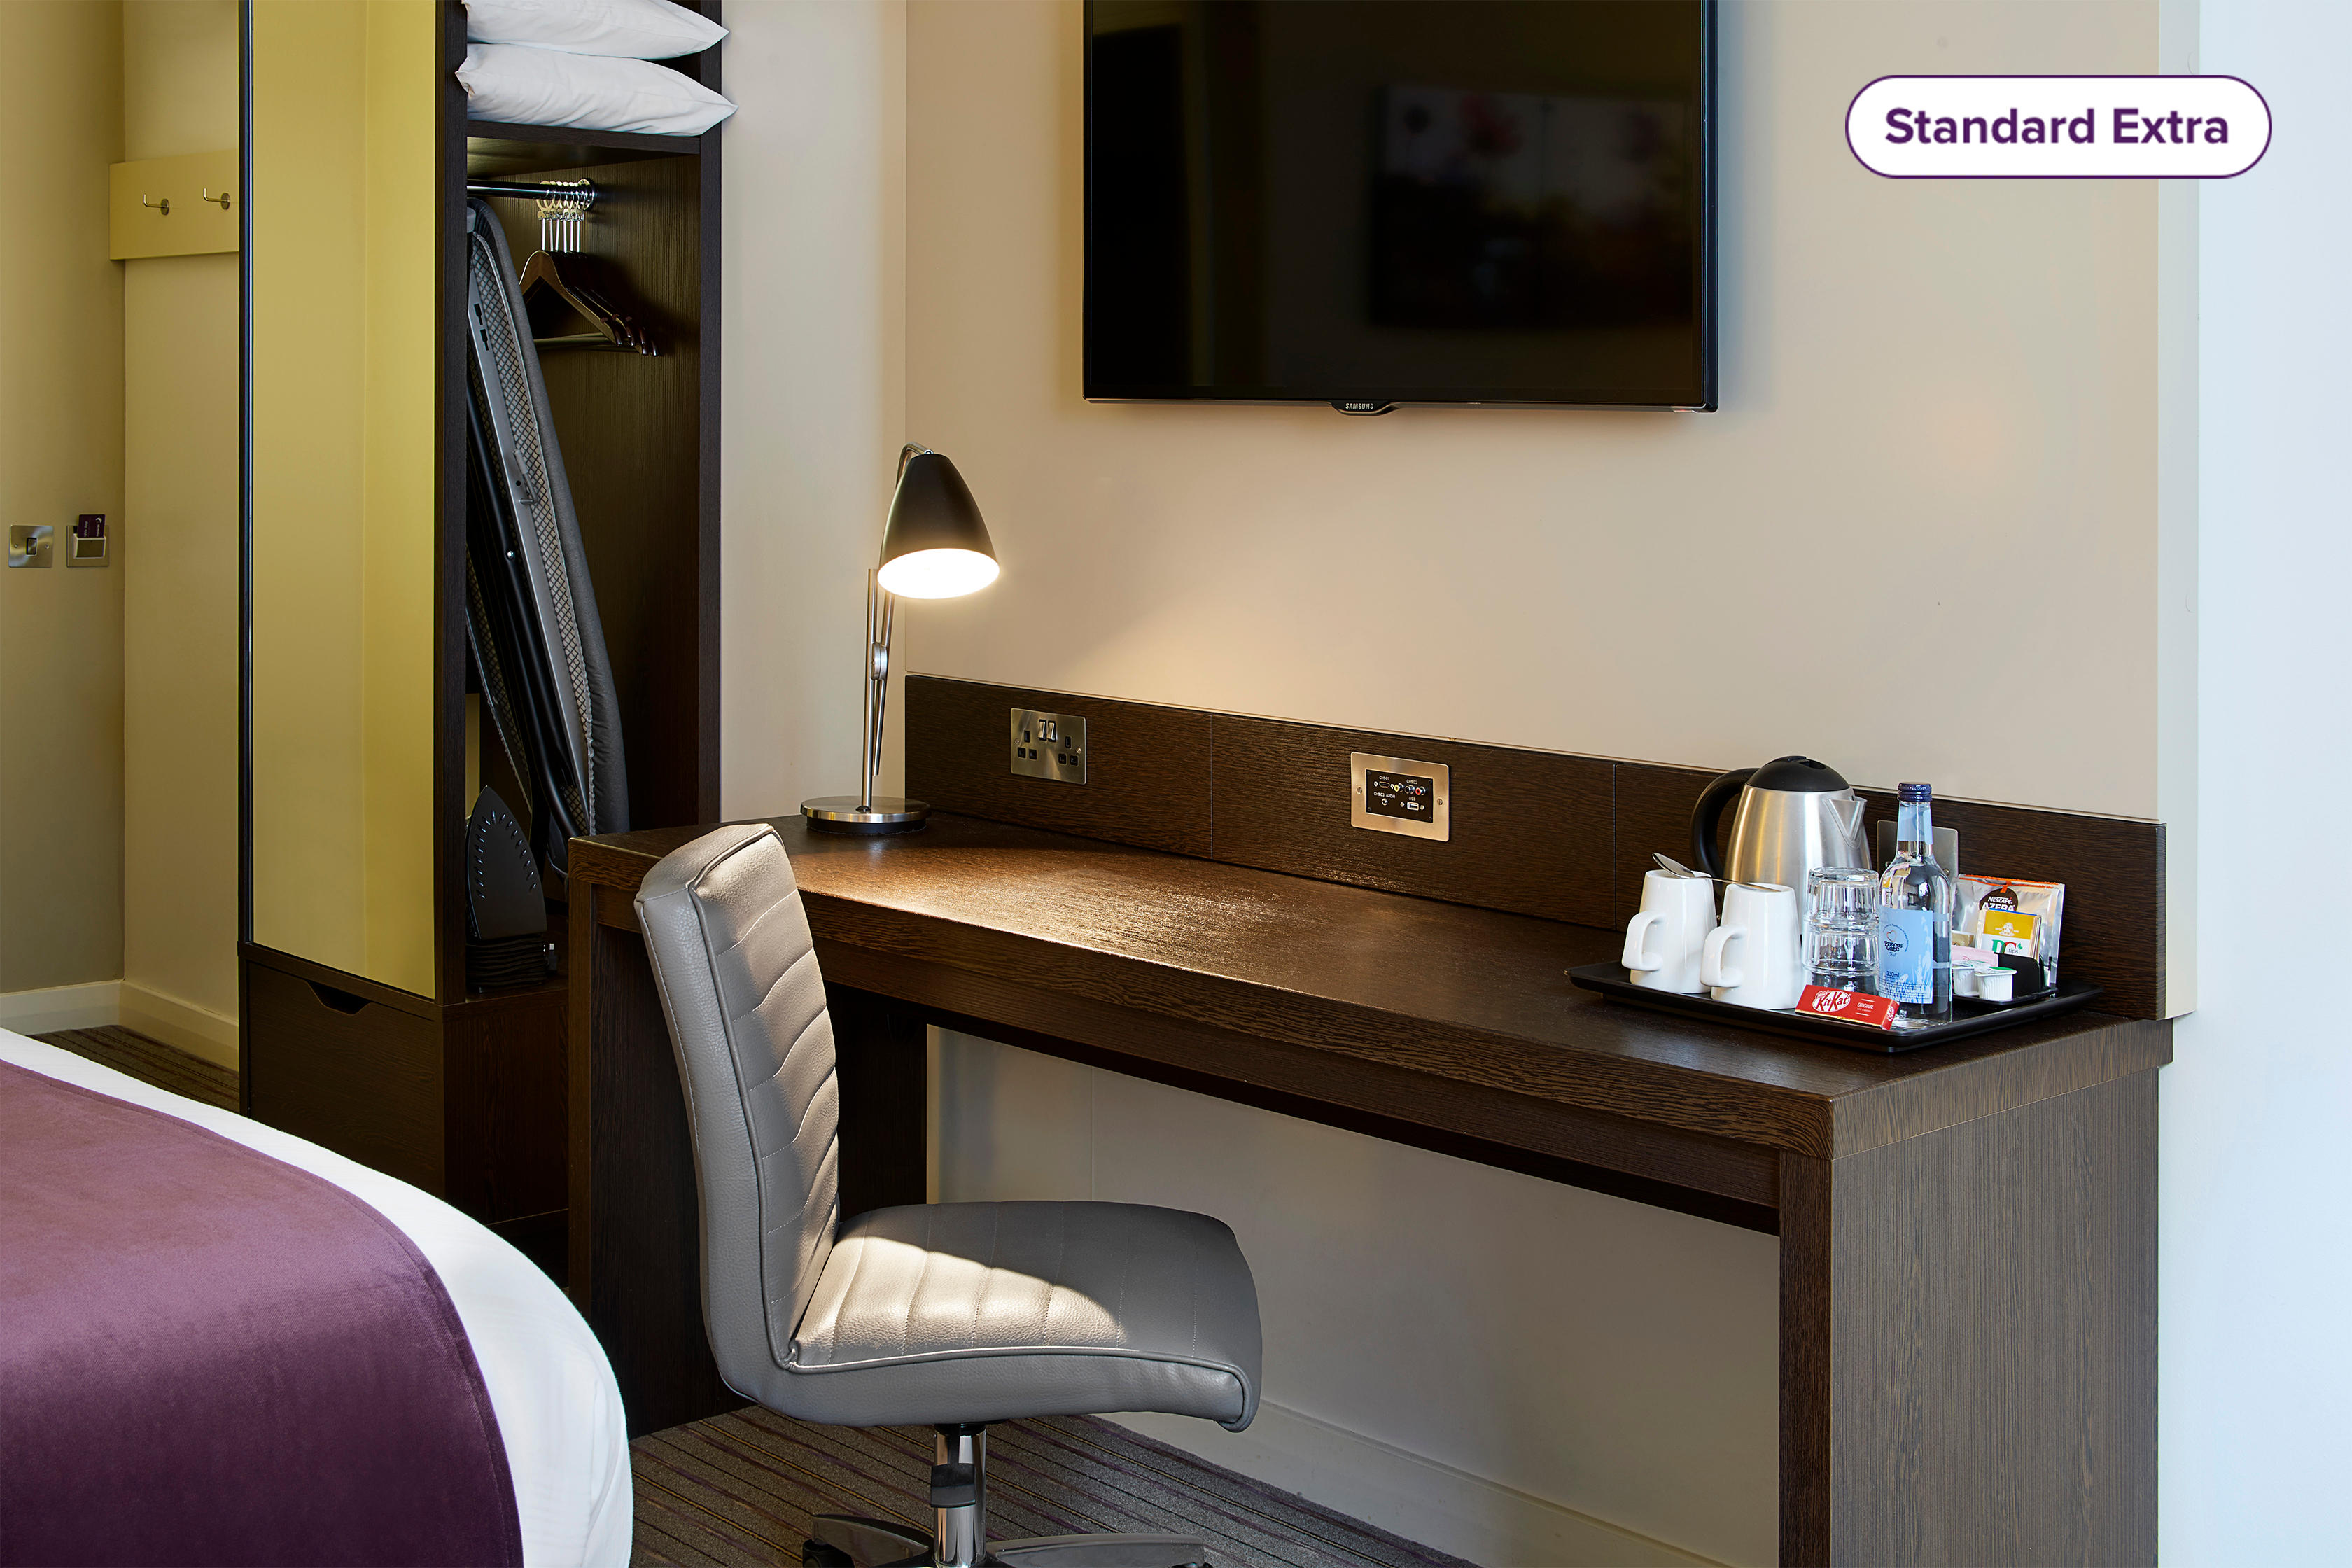 Standard Extra Bedroom with TV Premier Inn Southampton City Centre hotel Southampton 03333 219006